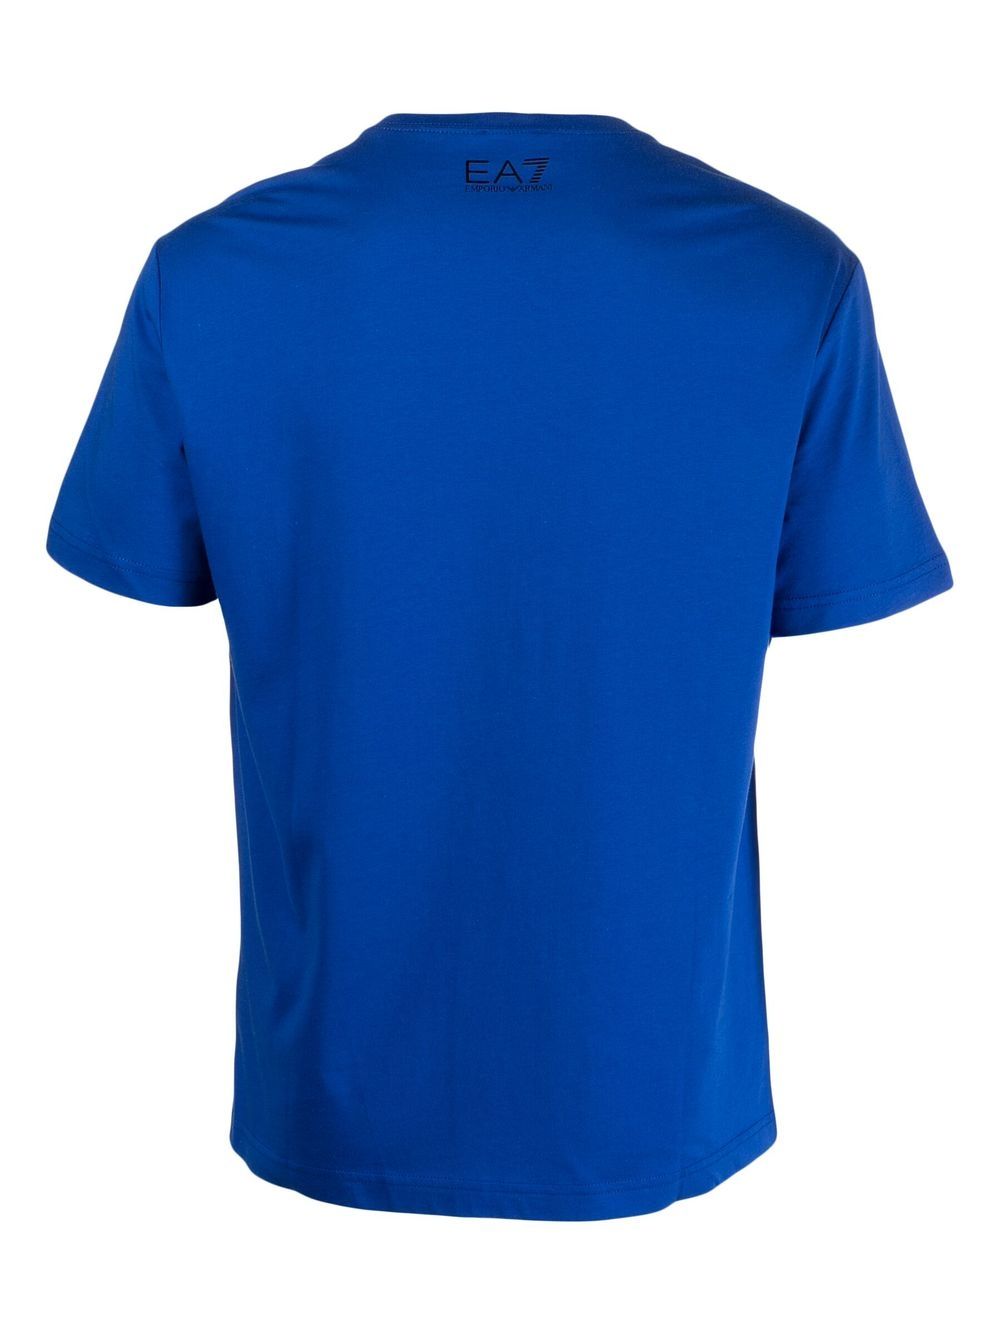 Ea7 Emporio Armani T-shirt met logo - Blauw